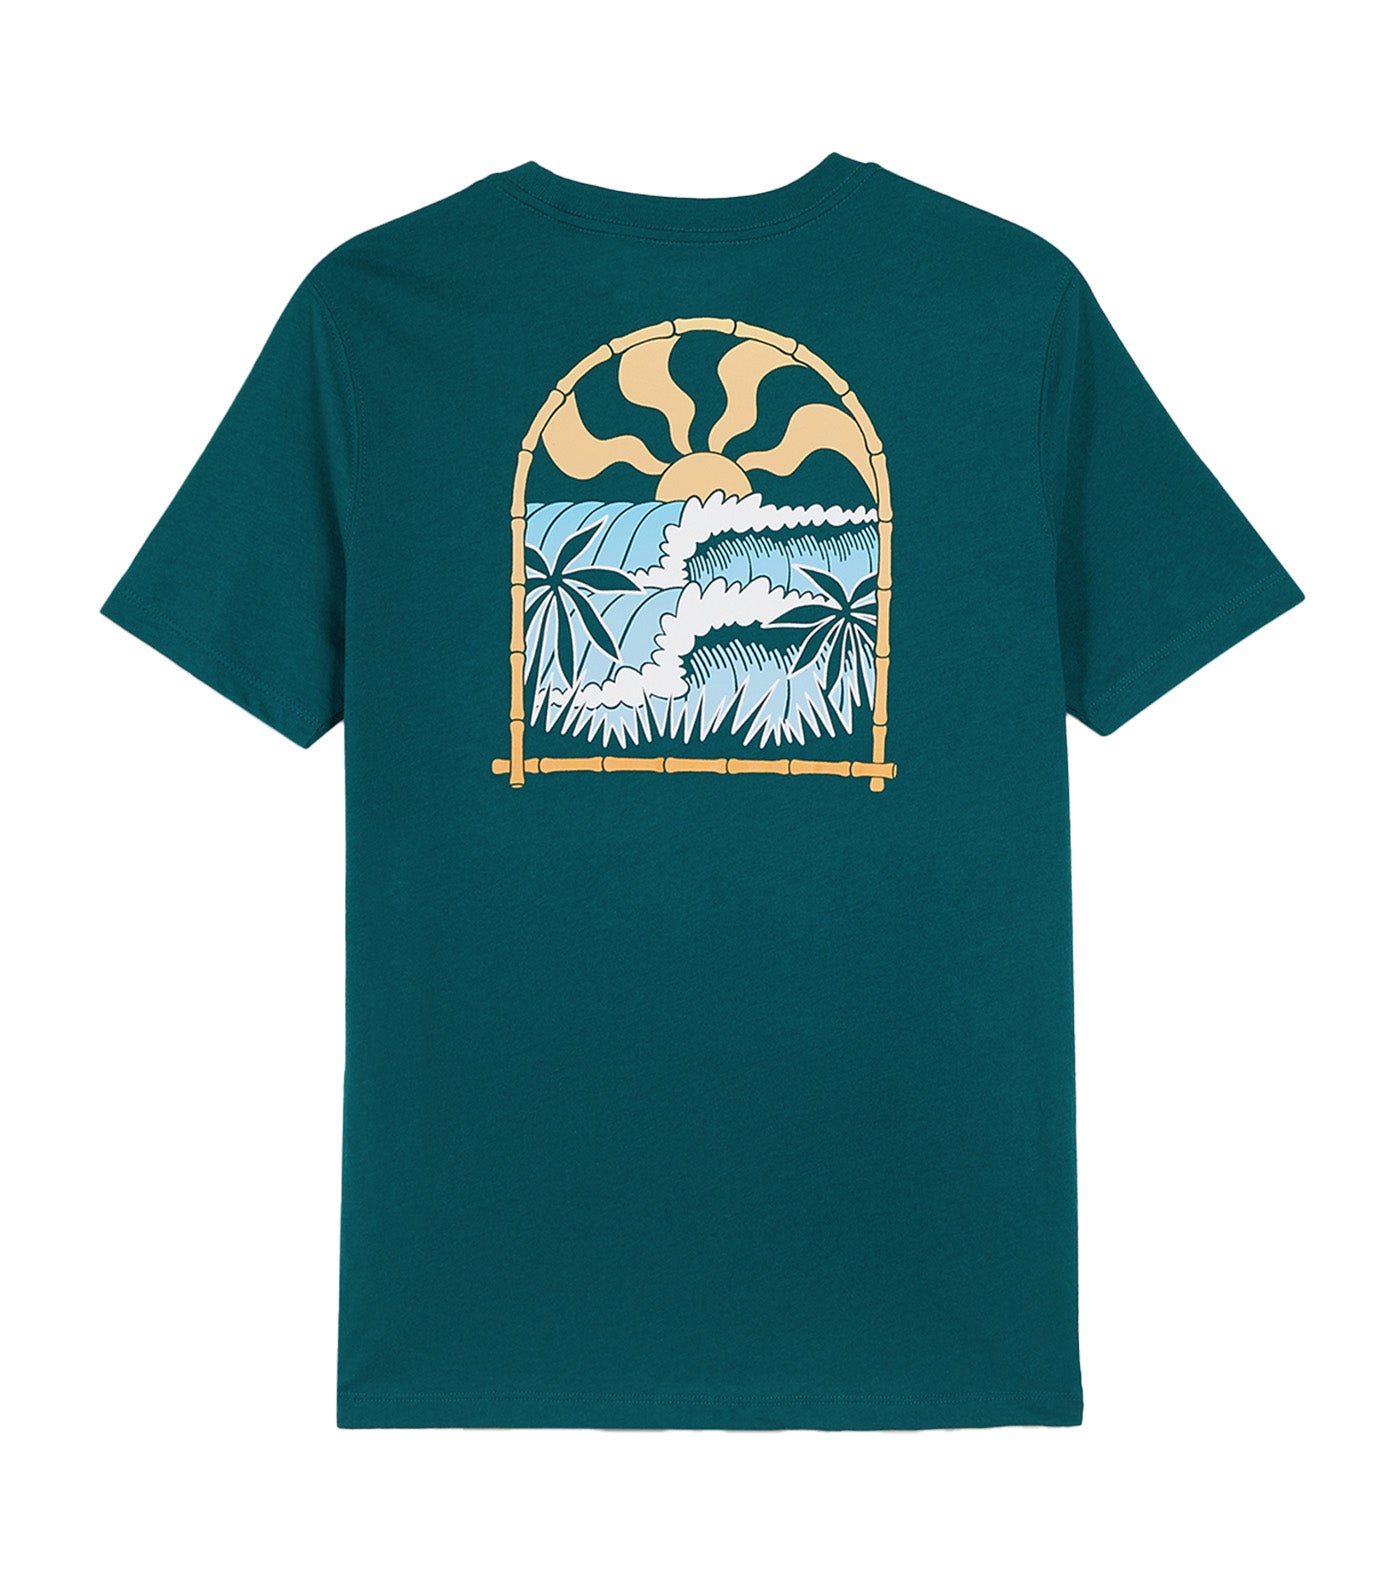 Soft-Washed Graphic T-Shirt for Men Black/Ocean Scene